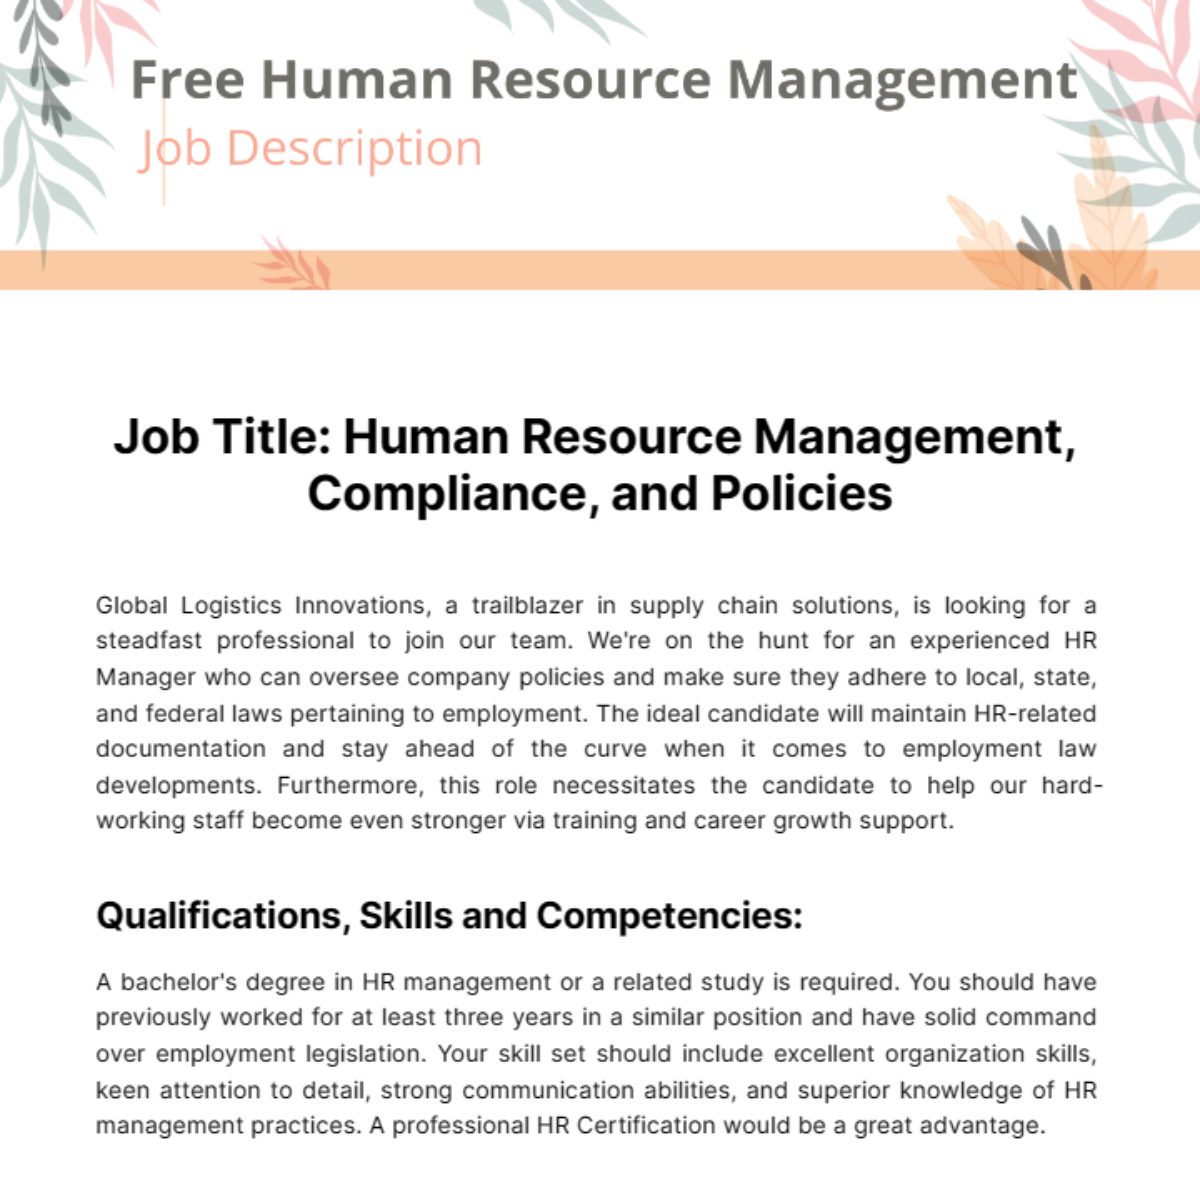 Free Human Resource Management Job Description Template